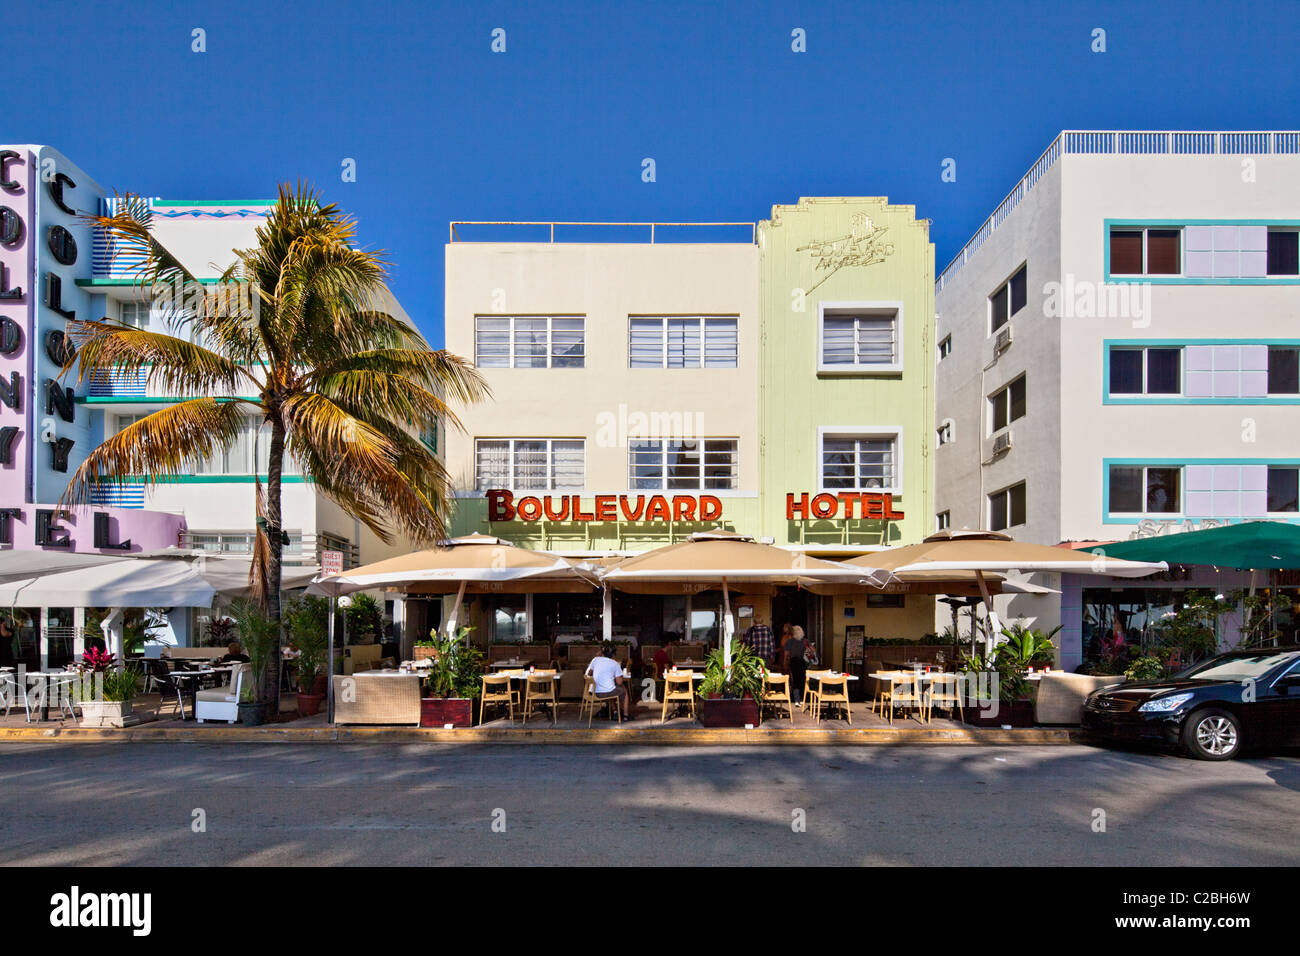 Boulevard Hotel, South Beach, Miami Stock Photo